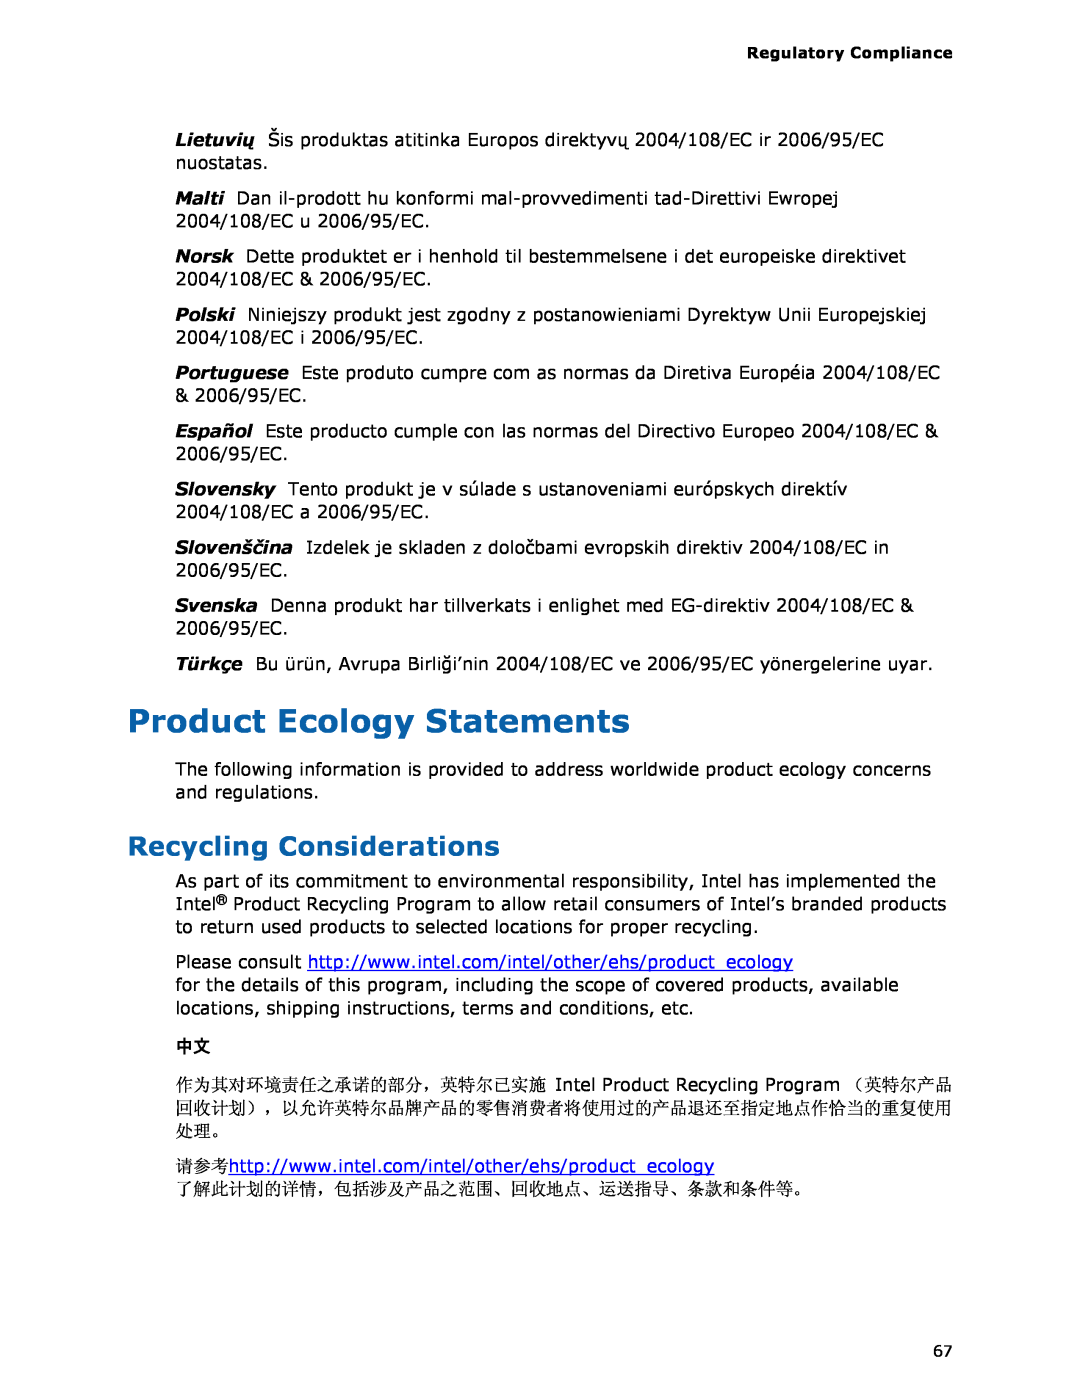 Intel BLKDH57JG manual Product Ecology Statements, Recycling Considerations 